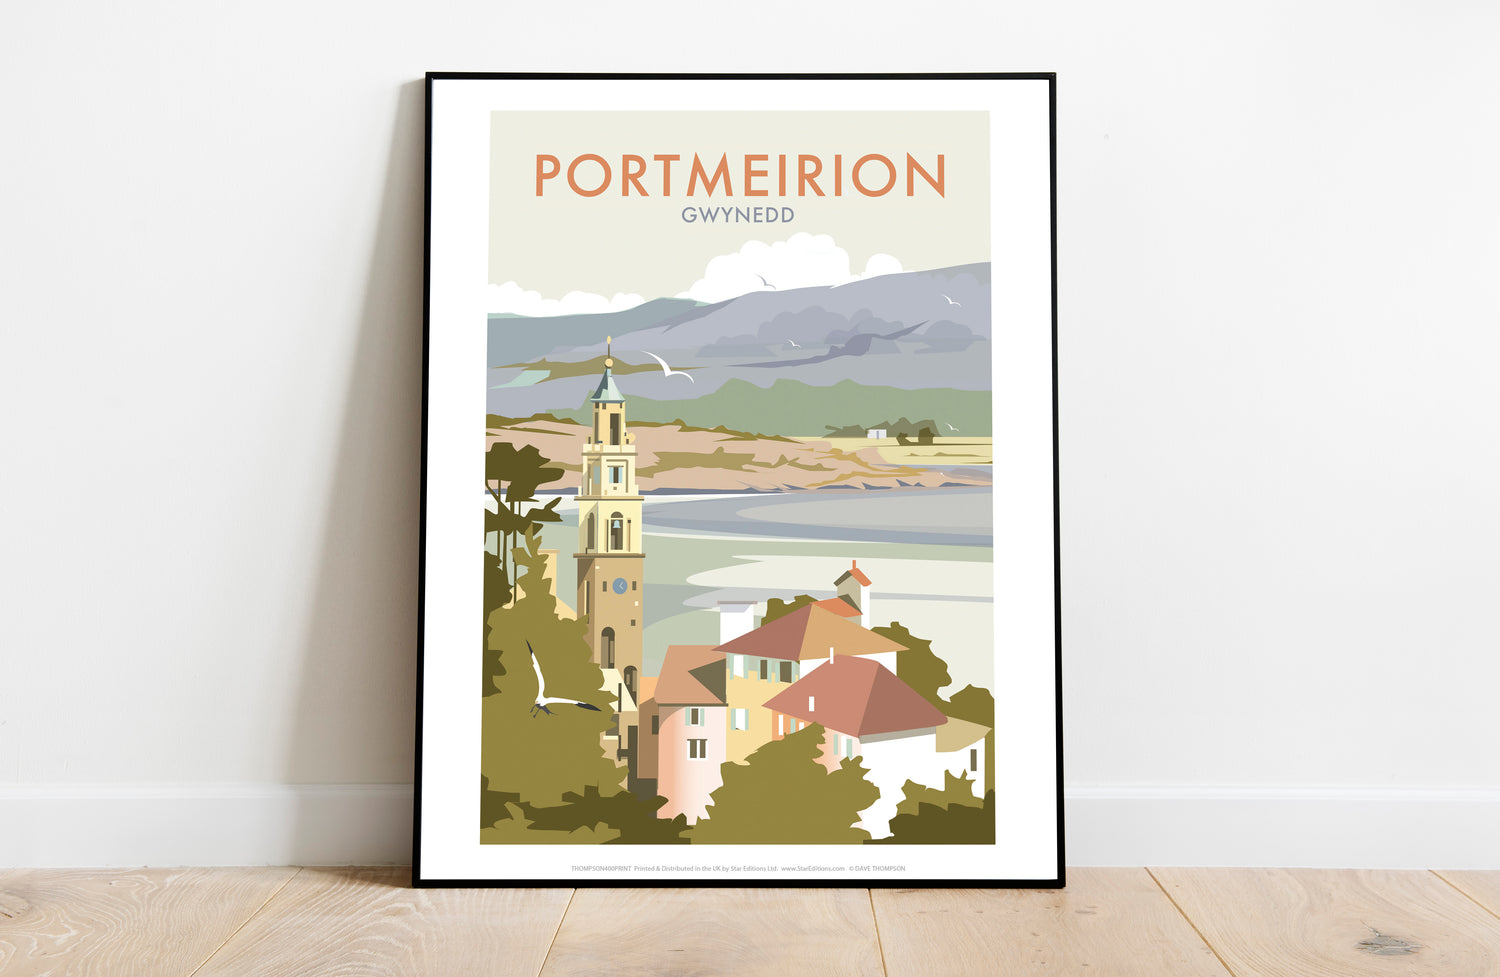 Portmeirion, Wales - Art Print